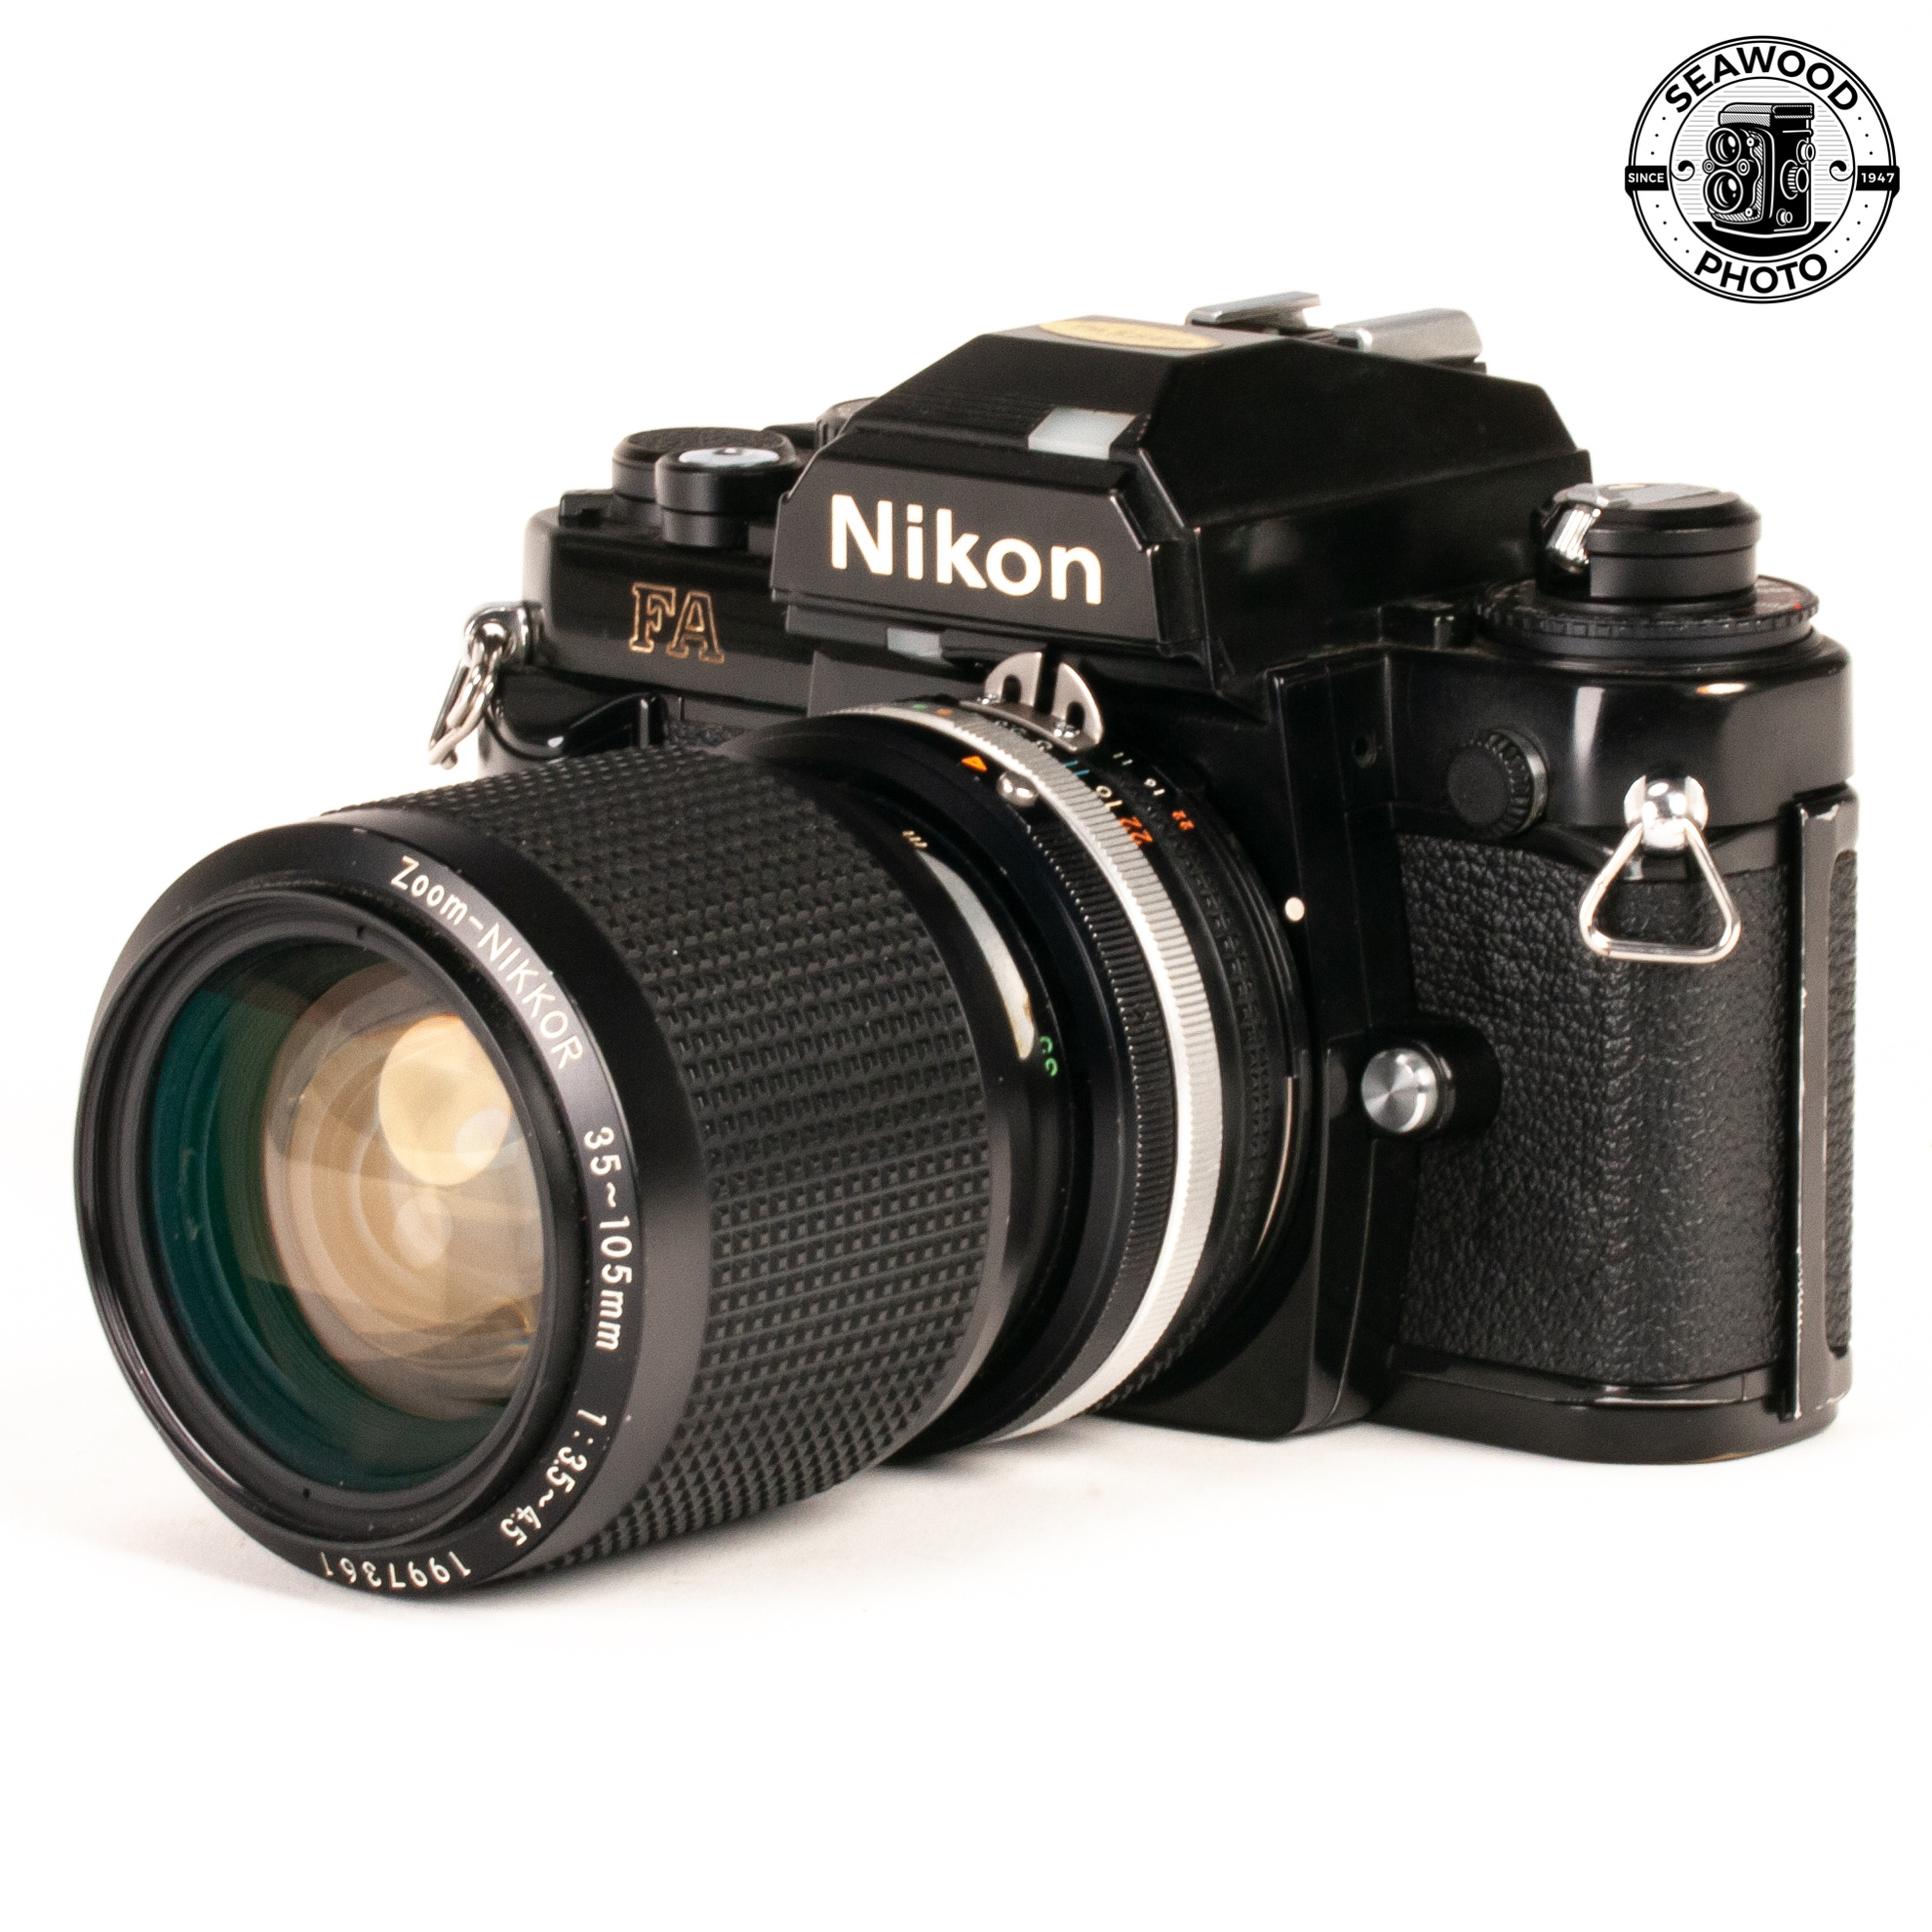 Nikon FA w/Nikkor 35-105mm f/3.5-4.5 GOOD+